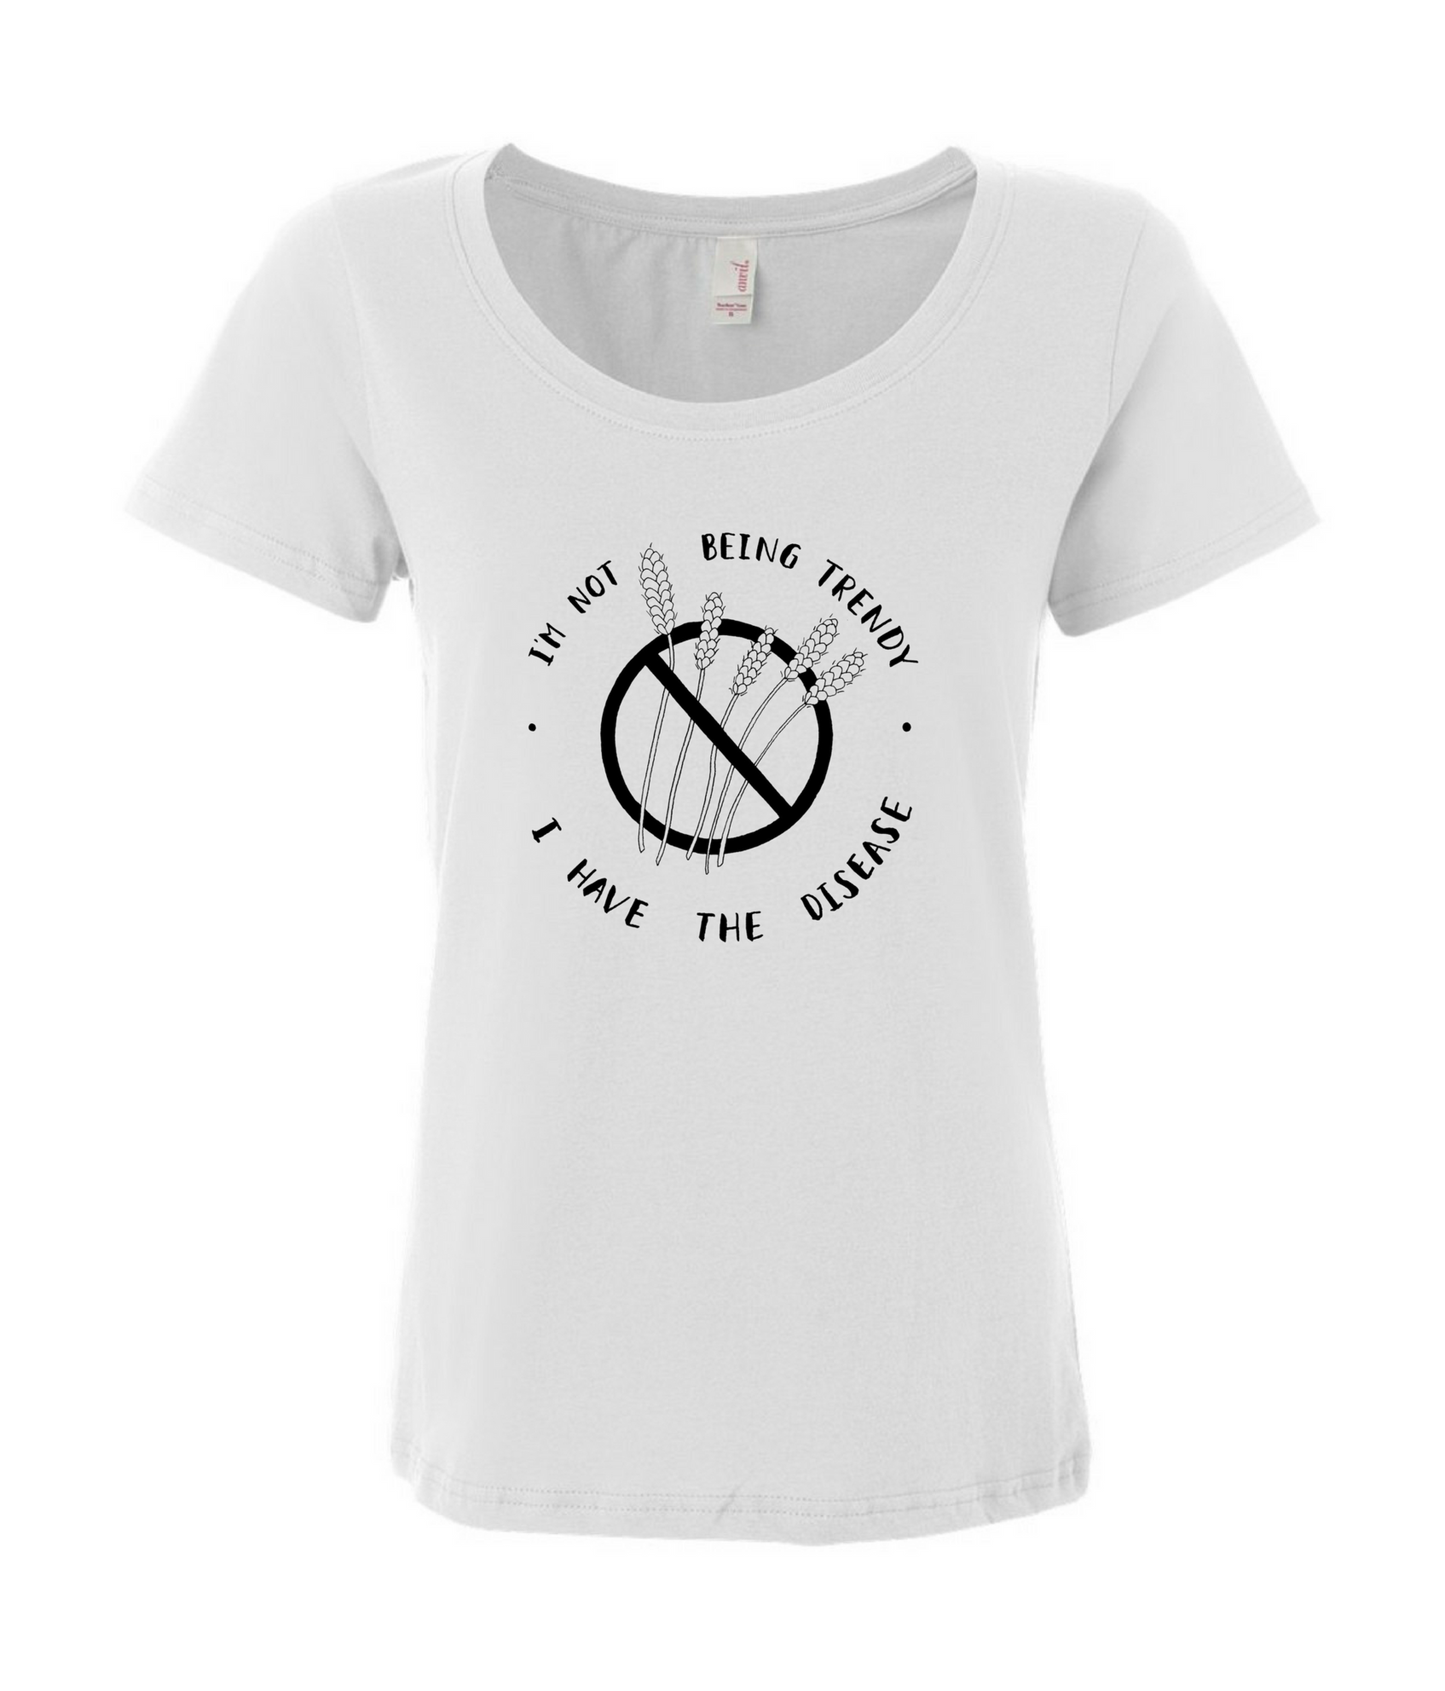 "I'm Not Being Trendy" - Women's White T-shirt for Celiacs